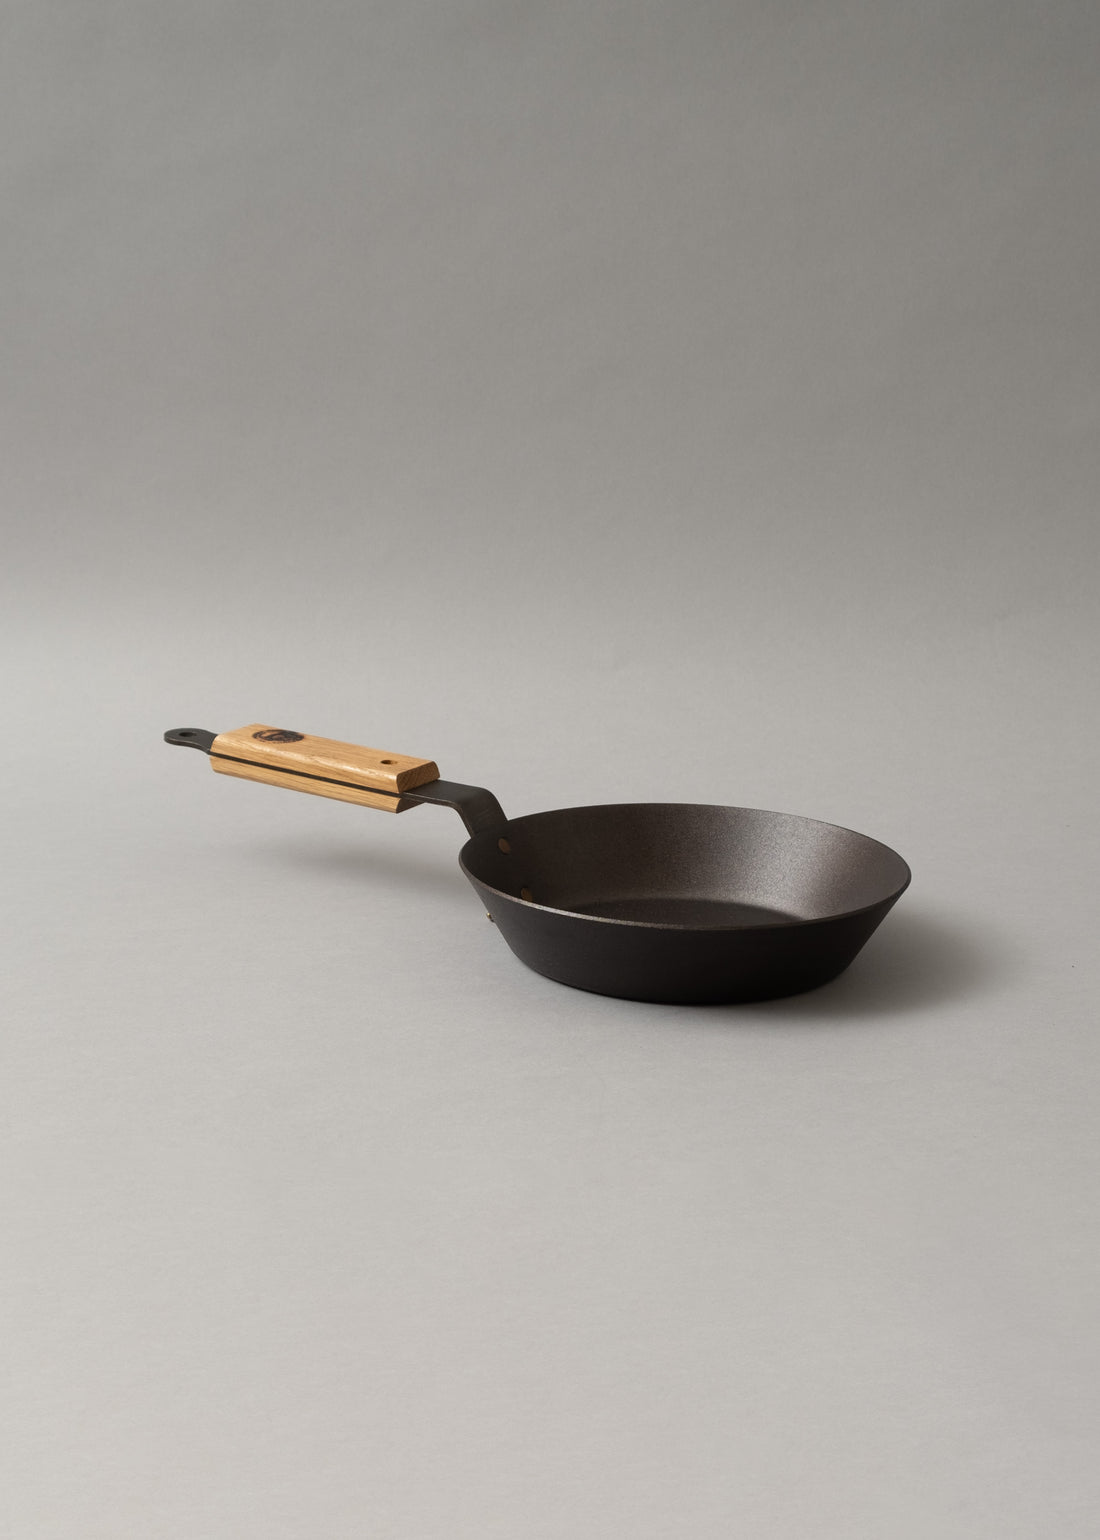 POELE NOMADE - POIGNÉE AMOVIBLE - GLAMPING PAN - ⌀ 20 cm - NETHERTON FOUNDRY